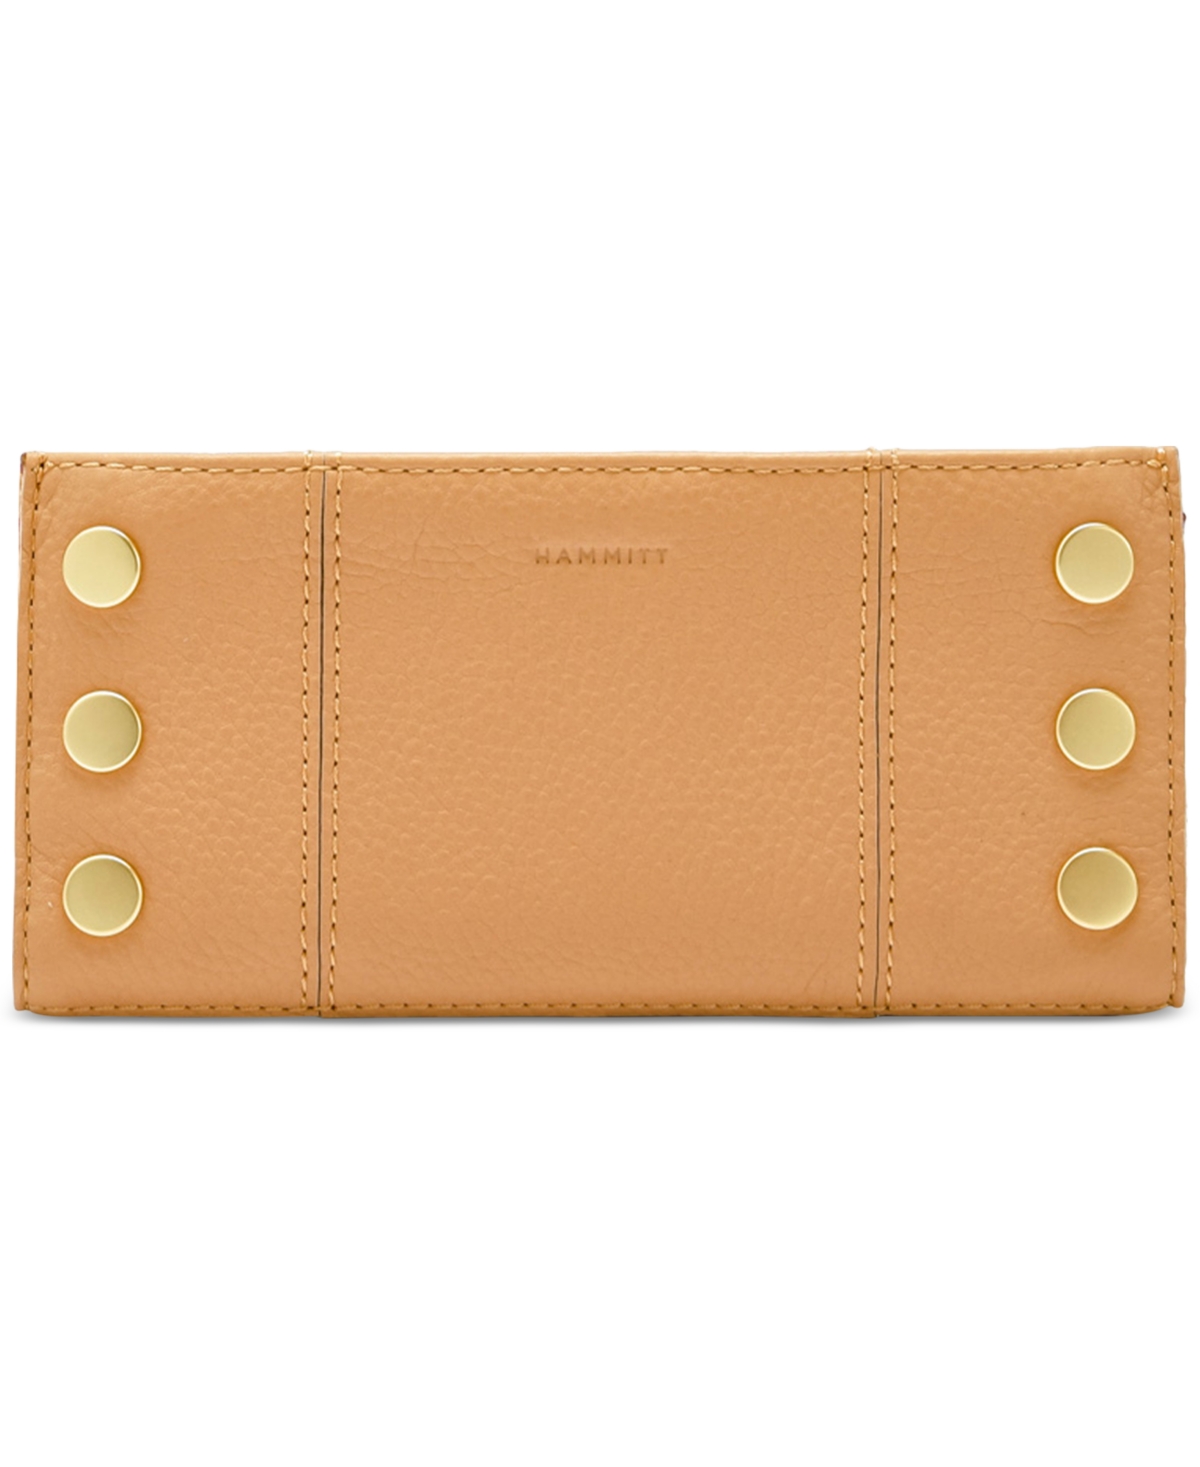 Hammitt 110 North Leather Wallet In Toast Tan,bg